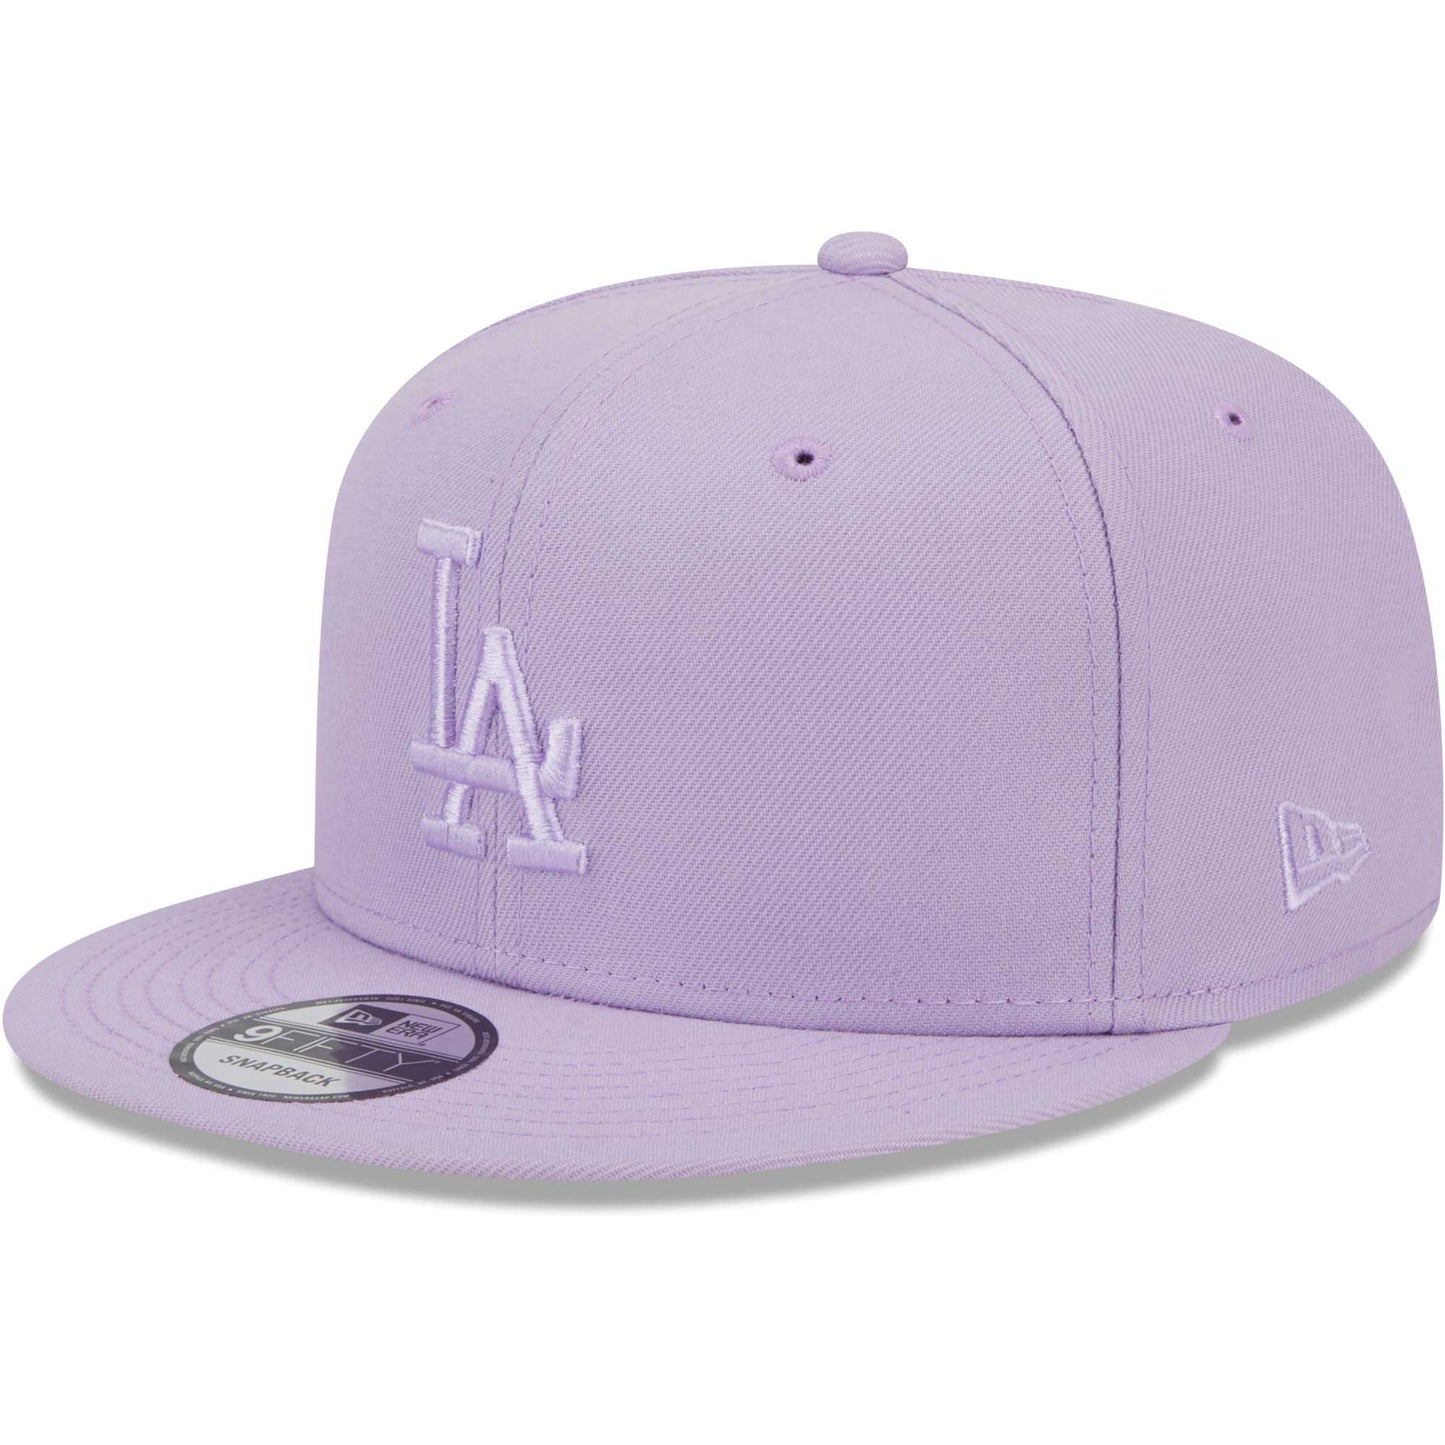 Los Angeles Dodgers New Era Spring Color Basic 9FIFTY Snapback Hat - Lavender